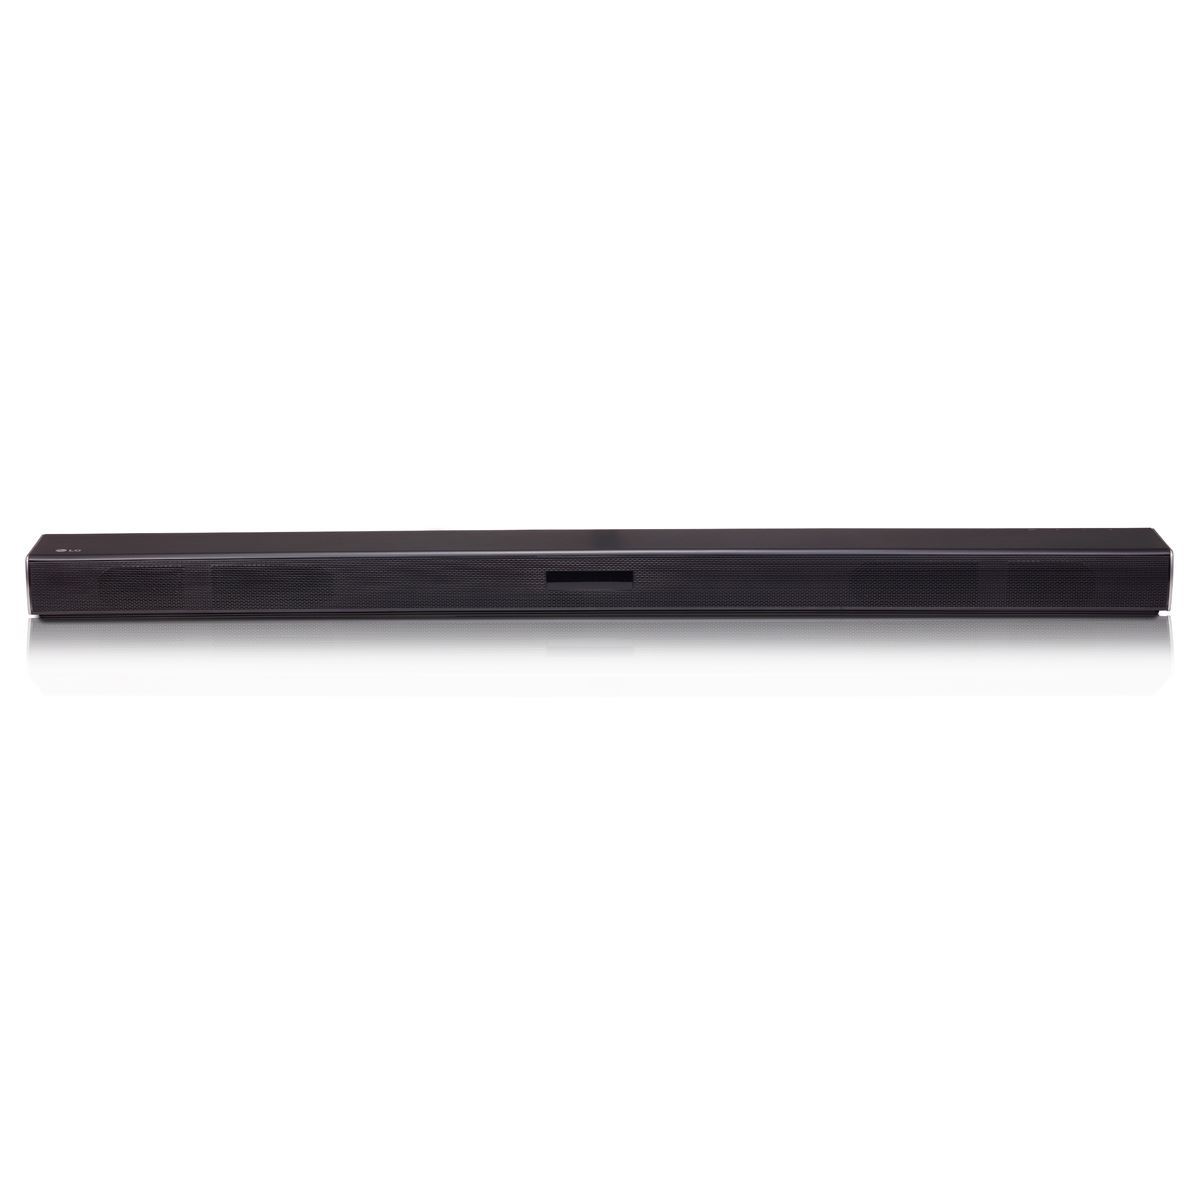 Bundle LG Pantalla 55” 55UH6150 Smart Tv  +  Sound Bar LG SH4